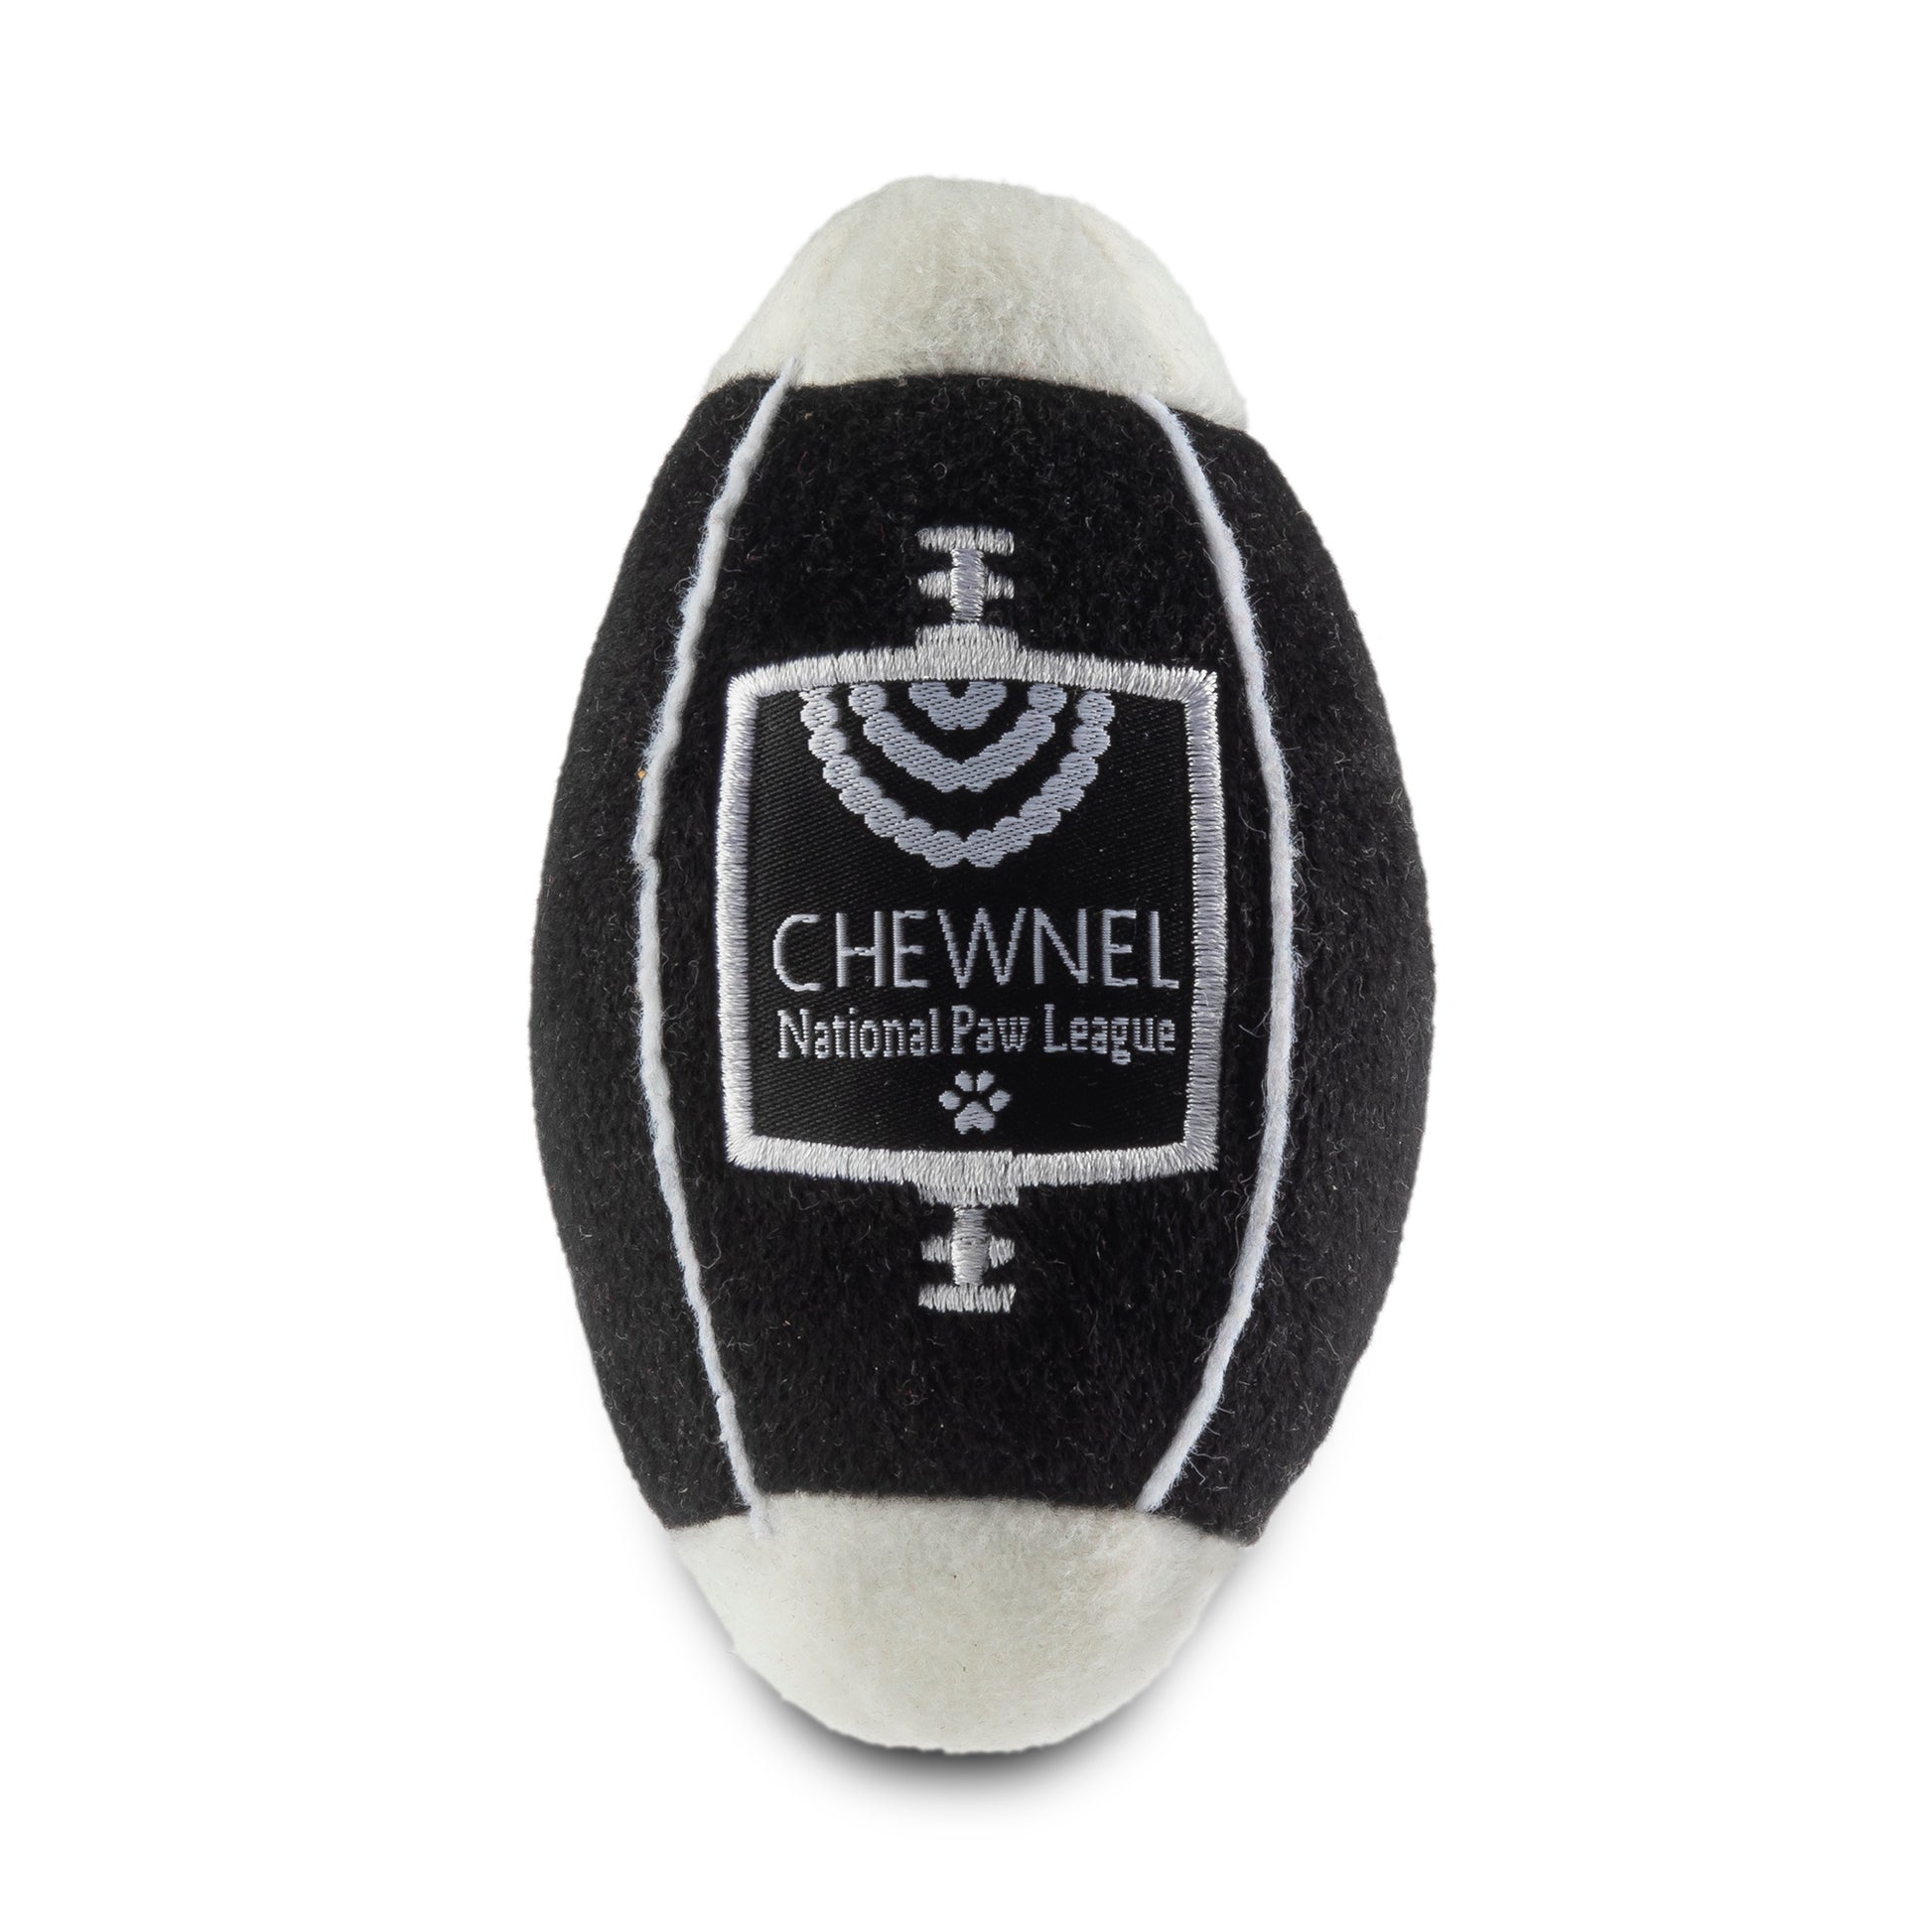 Chewnel Football Plush Toy